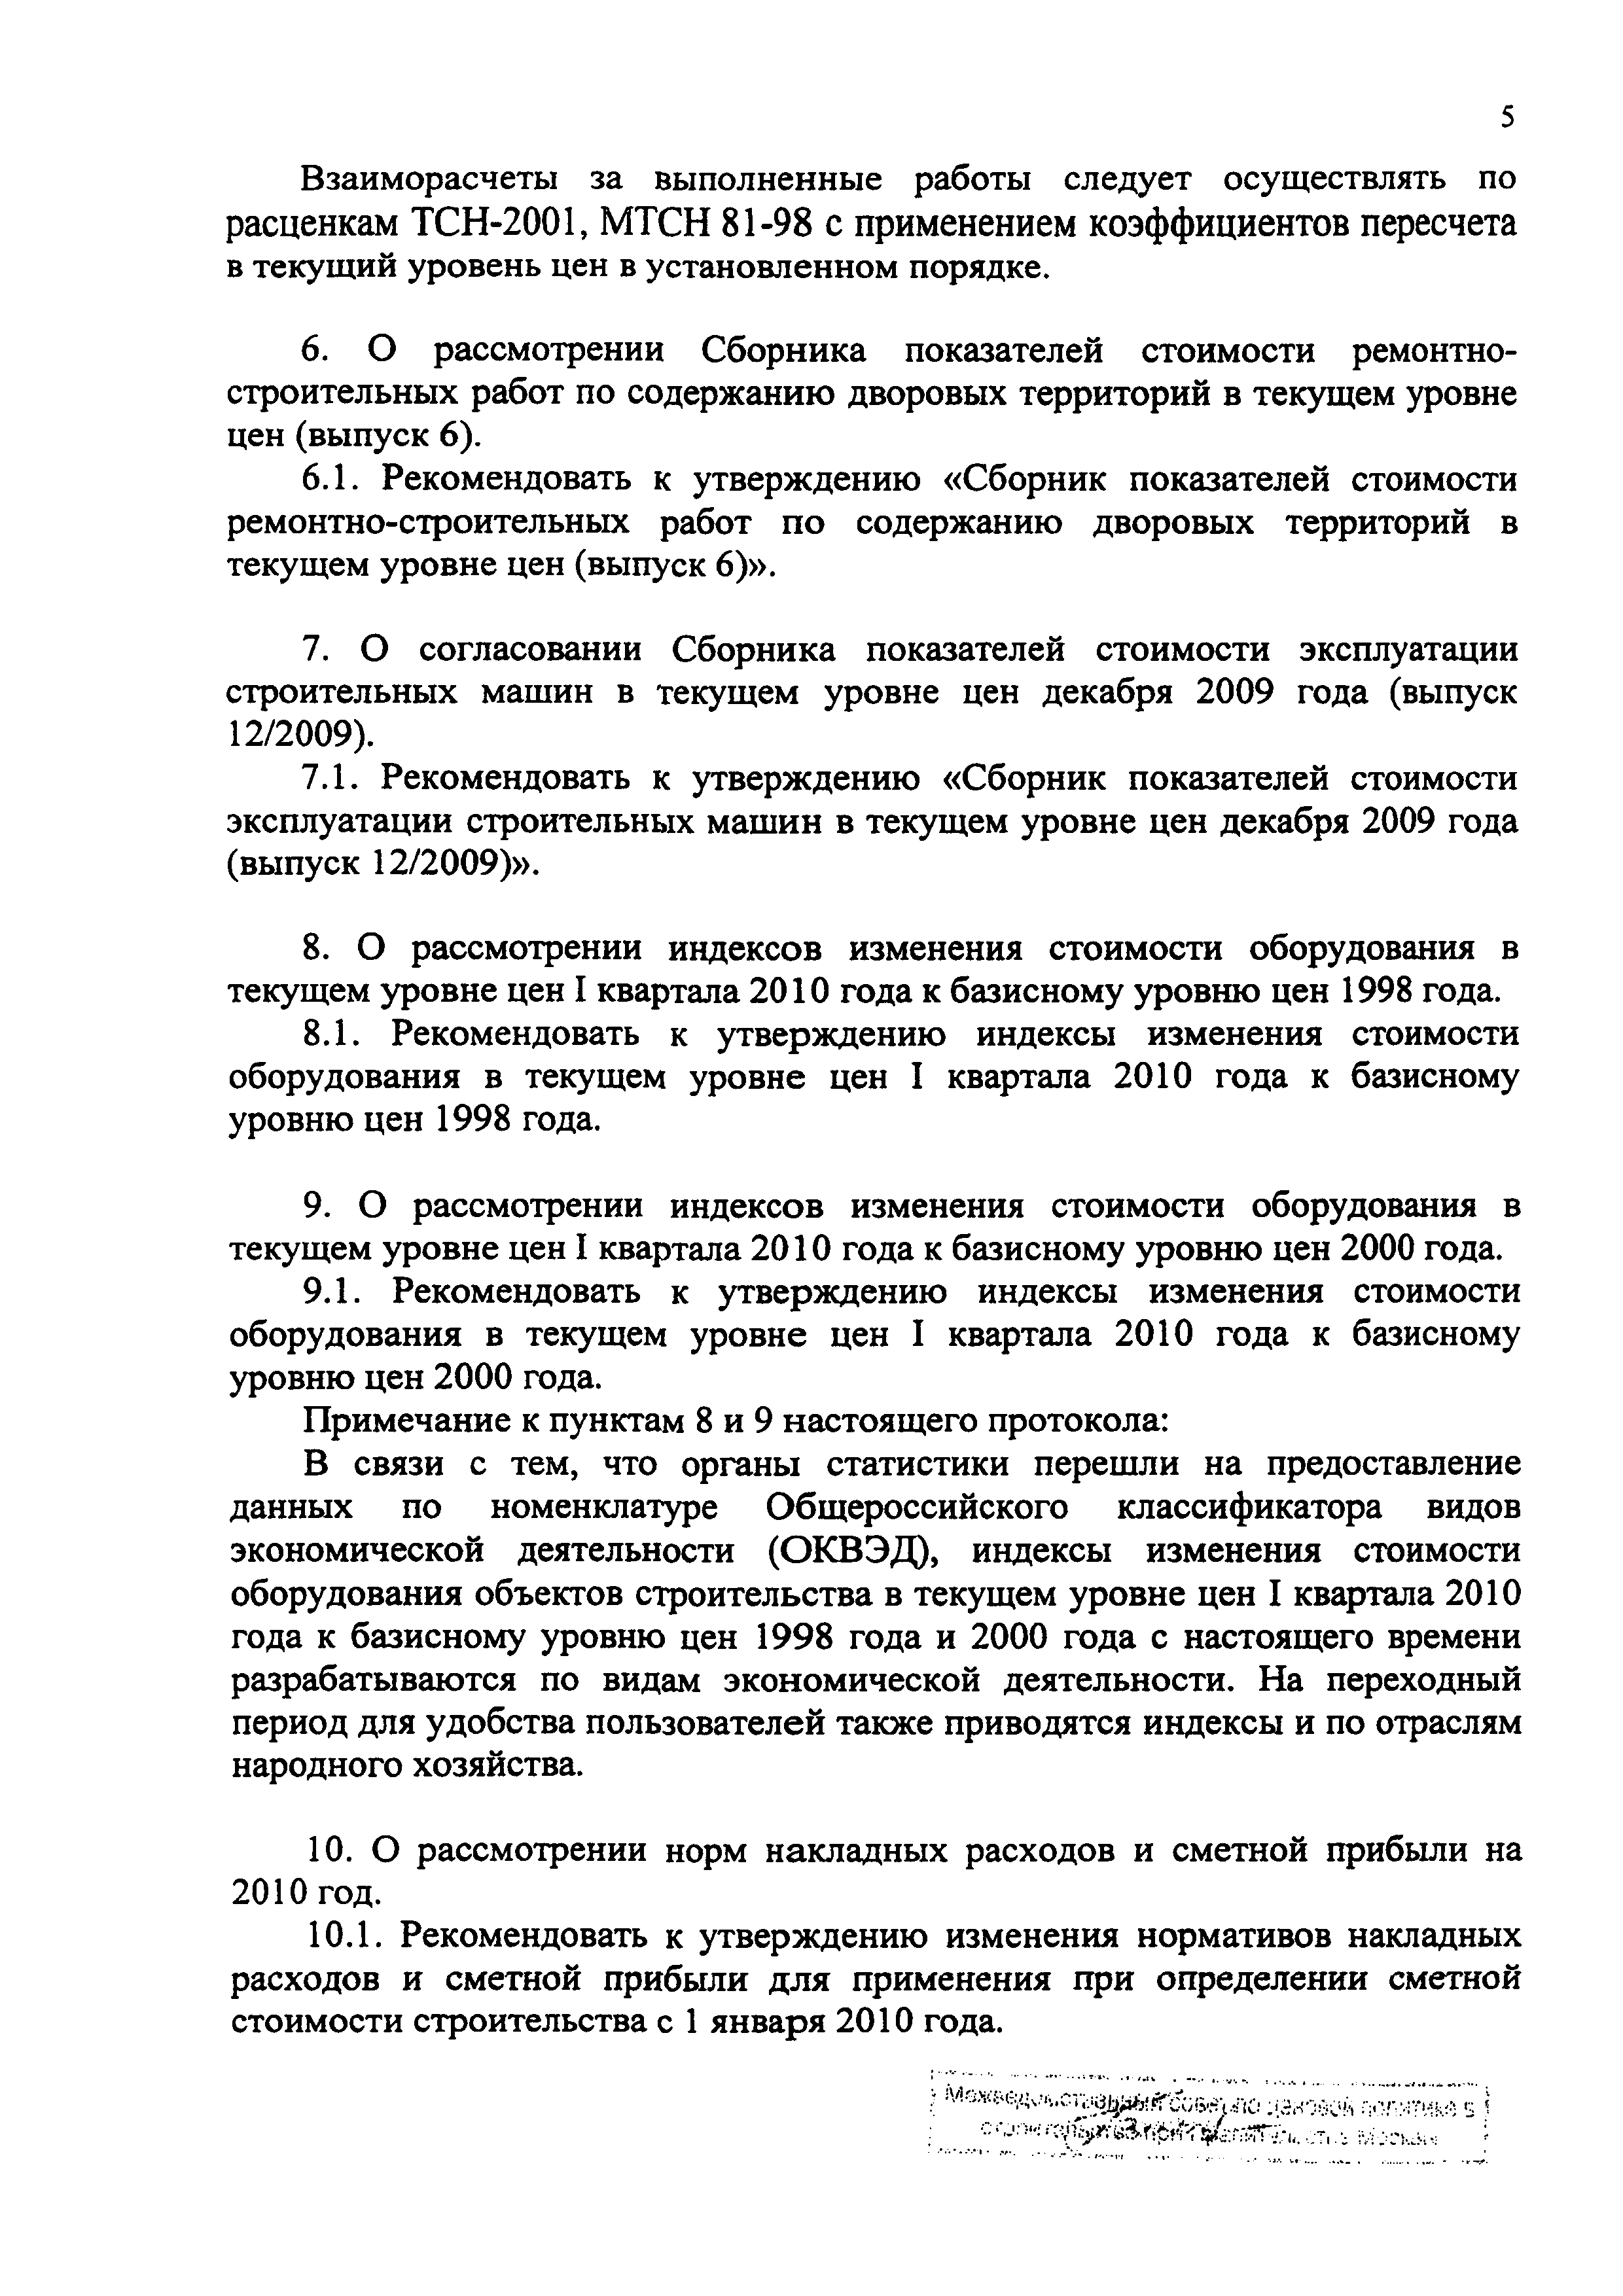 Протокол МВС-12-09